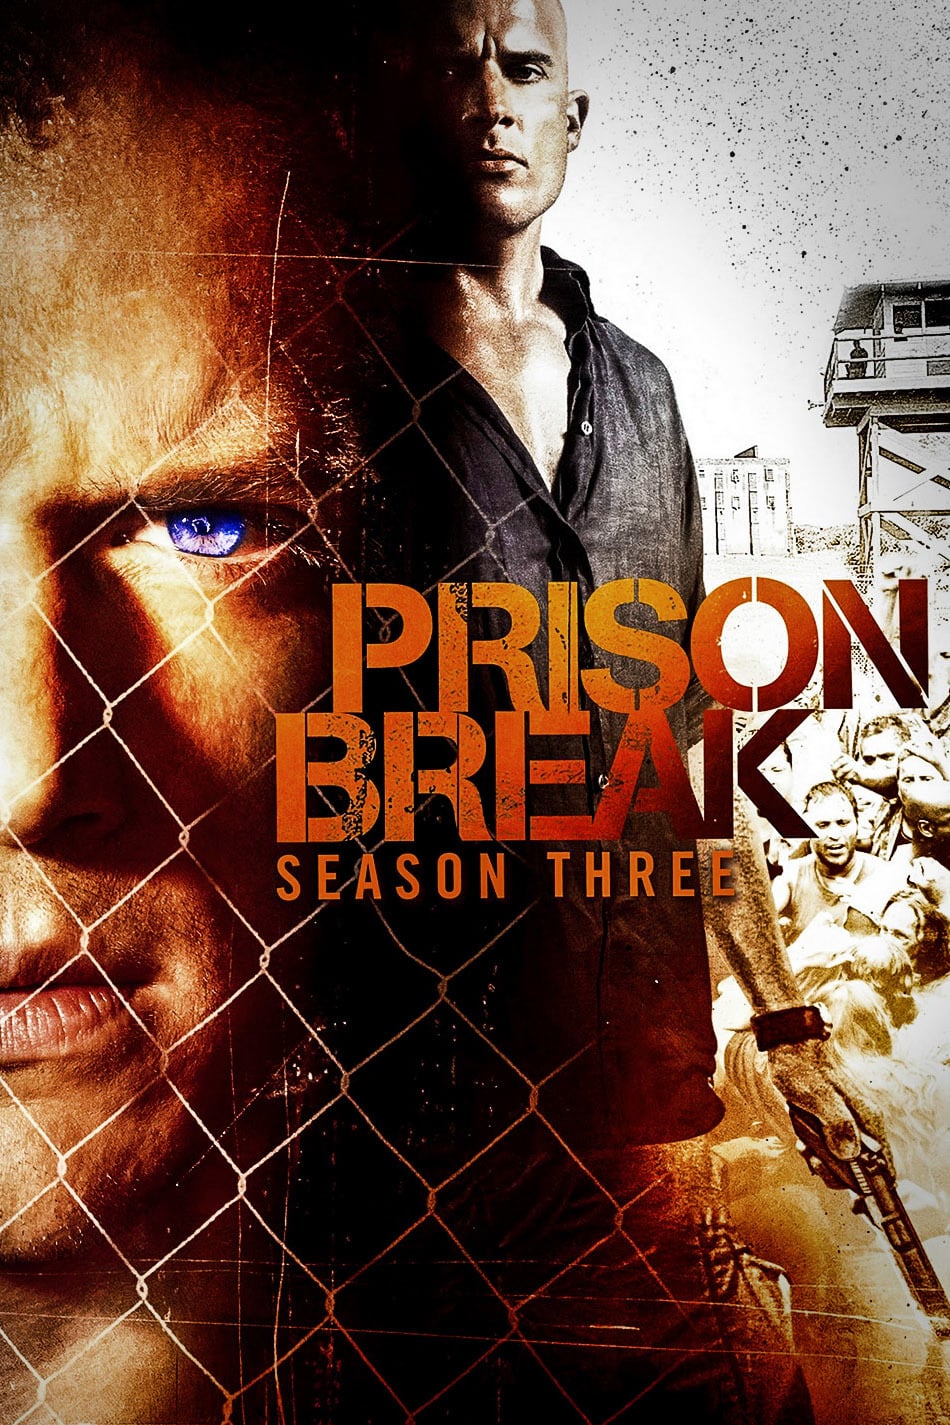 prison break season 1 episodes list